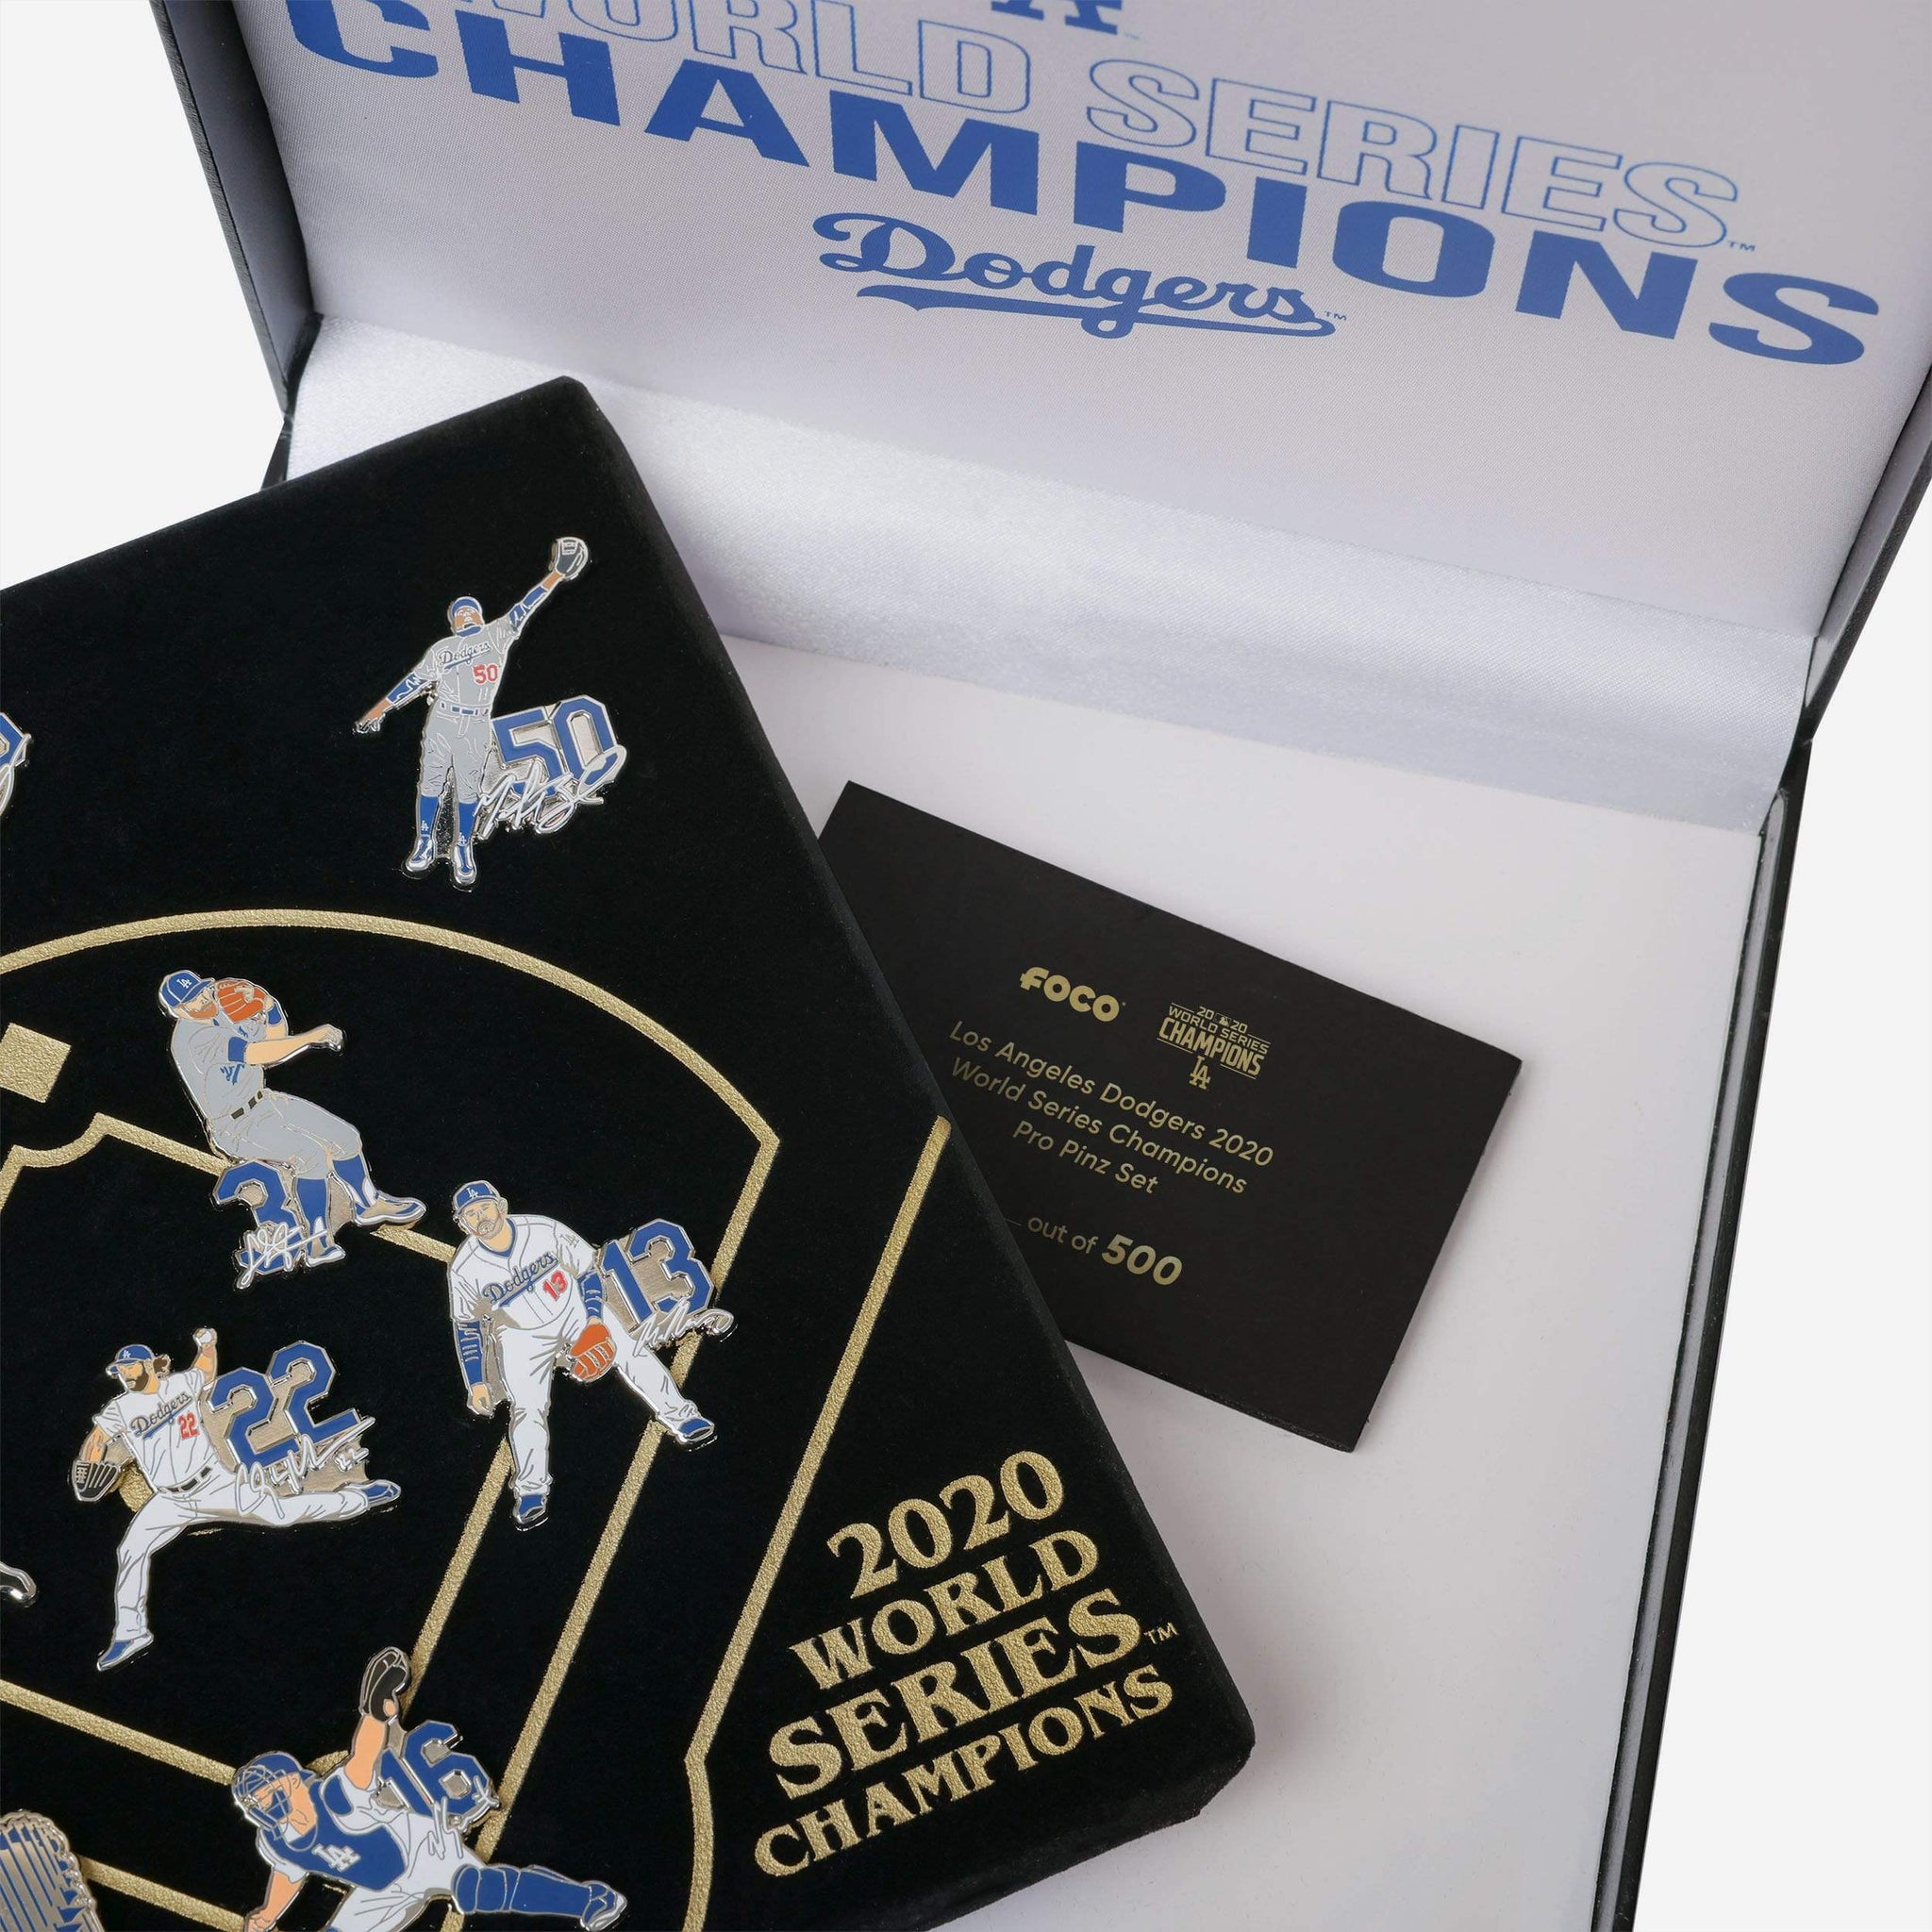 Los Angeles Dodgers 2020 World Series Champions - Diamond Series